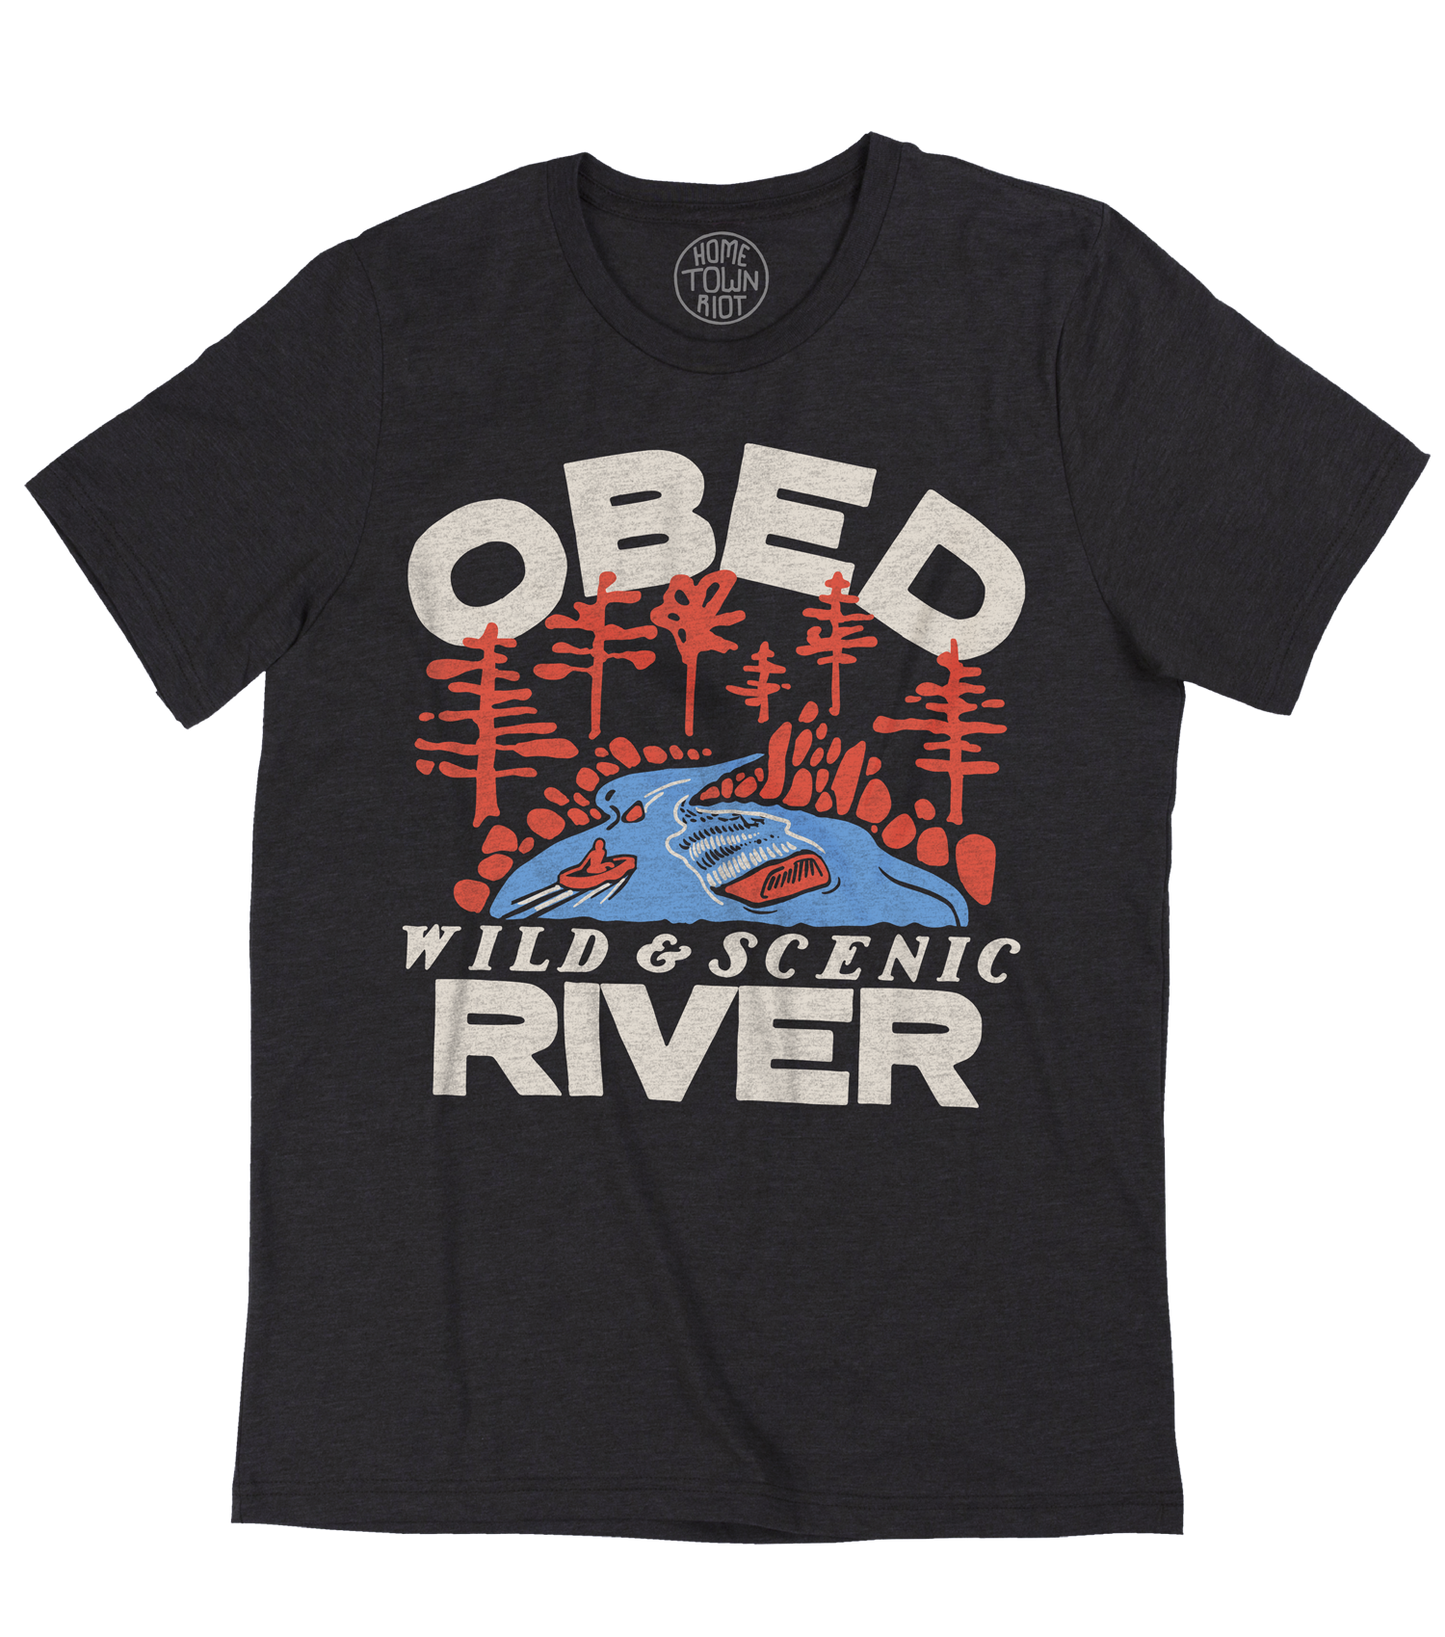 Obed Wild & Scenic River Shirt